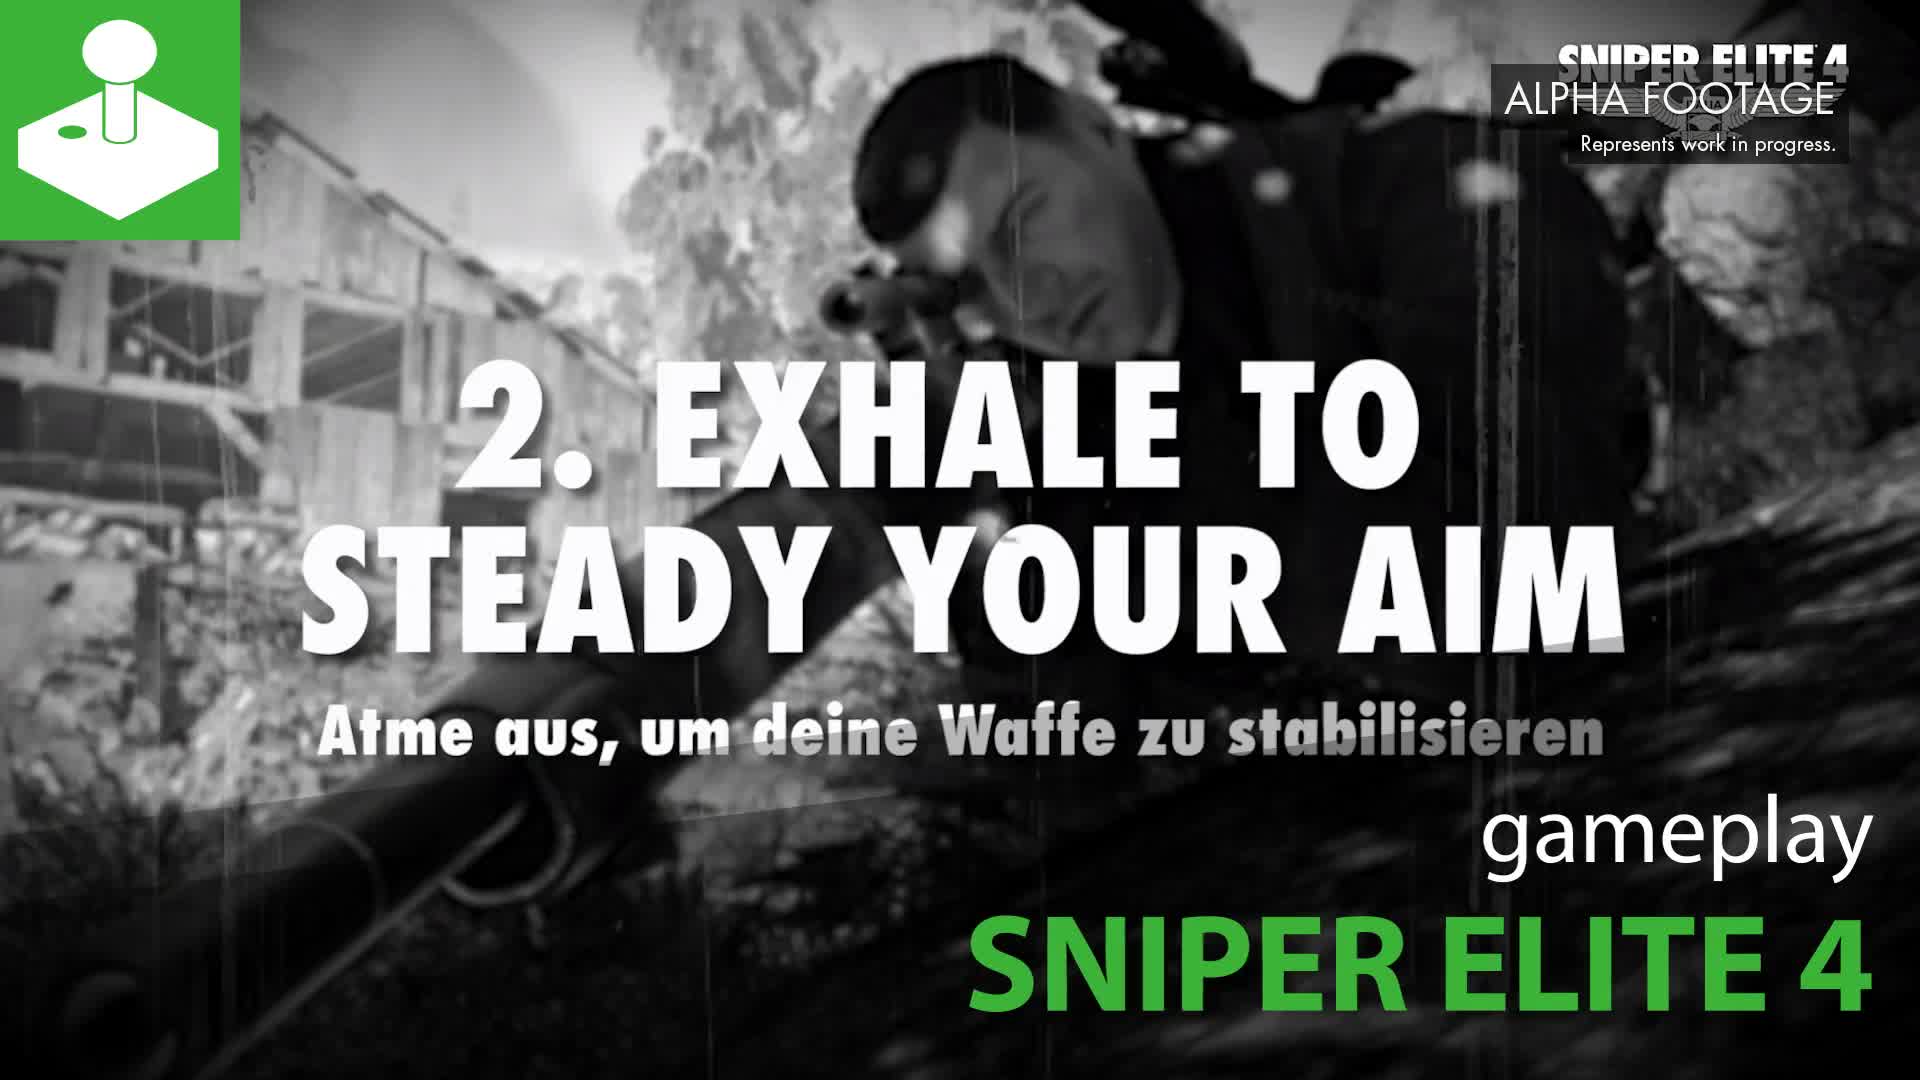 Sniper Elite 4 - Gamescom 2016 gameplay